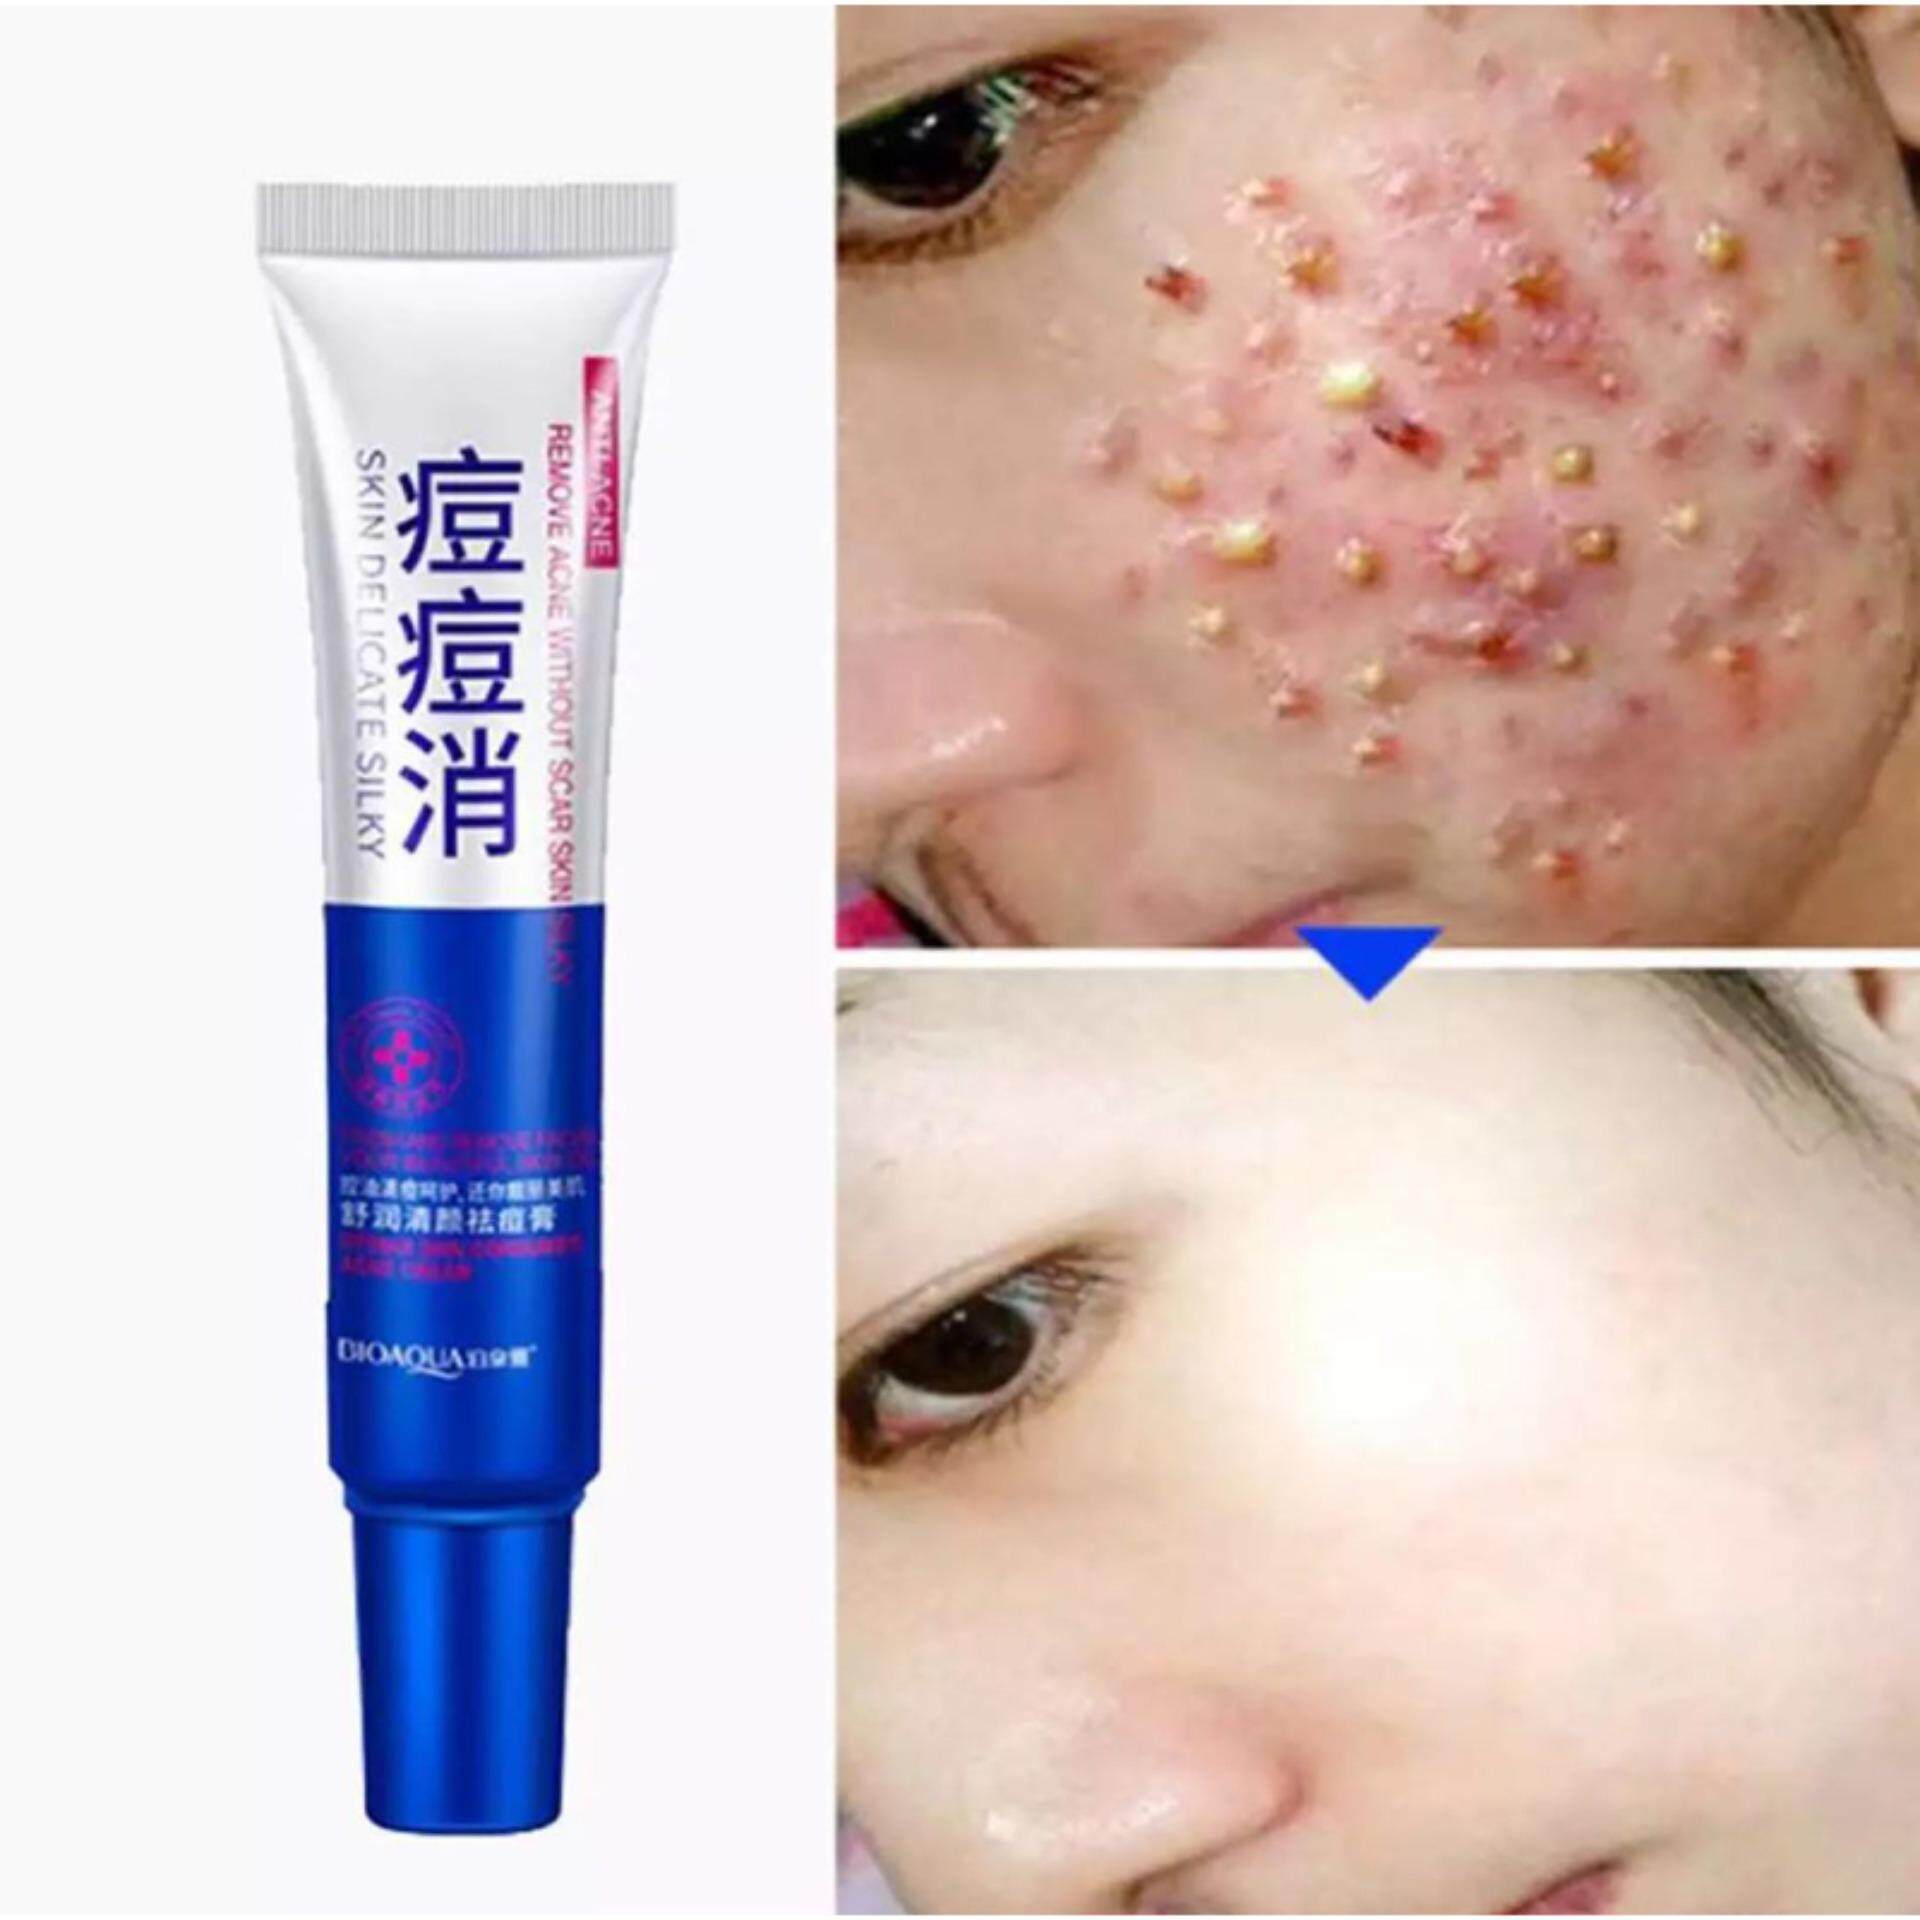 BIOAQUA Acne cream ครีมรักษาสิว ครีมแต้มสิว เจลรักษาสิว ครีมลบสิว ครีมรักษารอยสิวรอยแดง เครื่องสำอางสำหรับผู้ที่เป็นสิว สวยเร่งด่วน ช่อมแชมและดูแลผิว acne scar cream Korea style an-ti acne